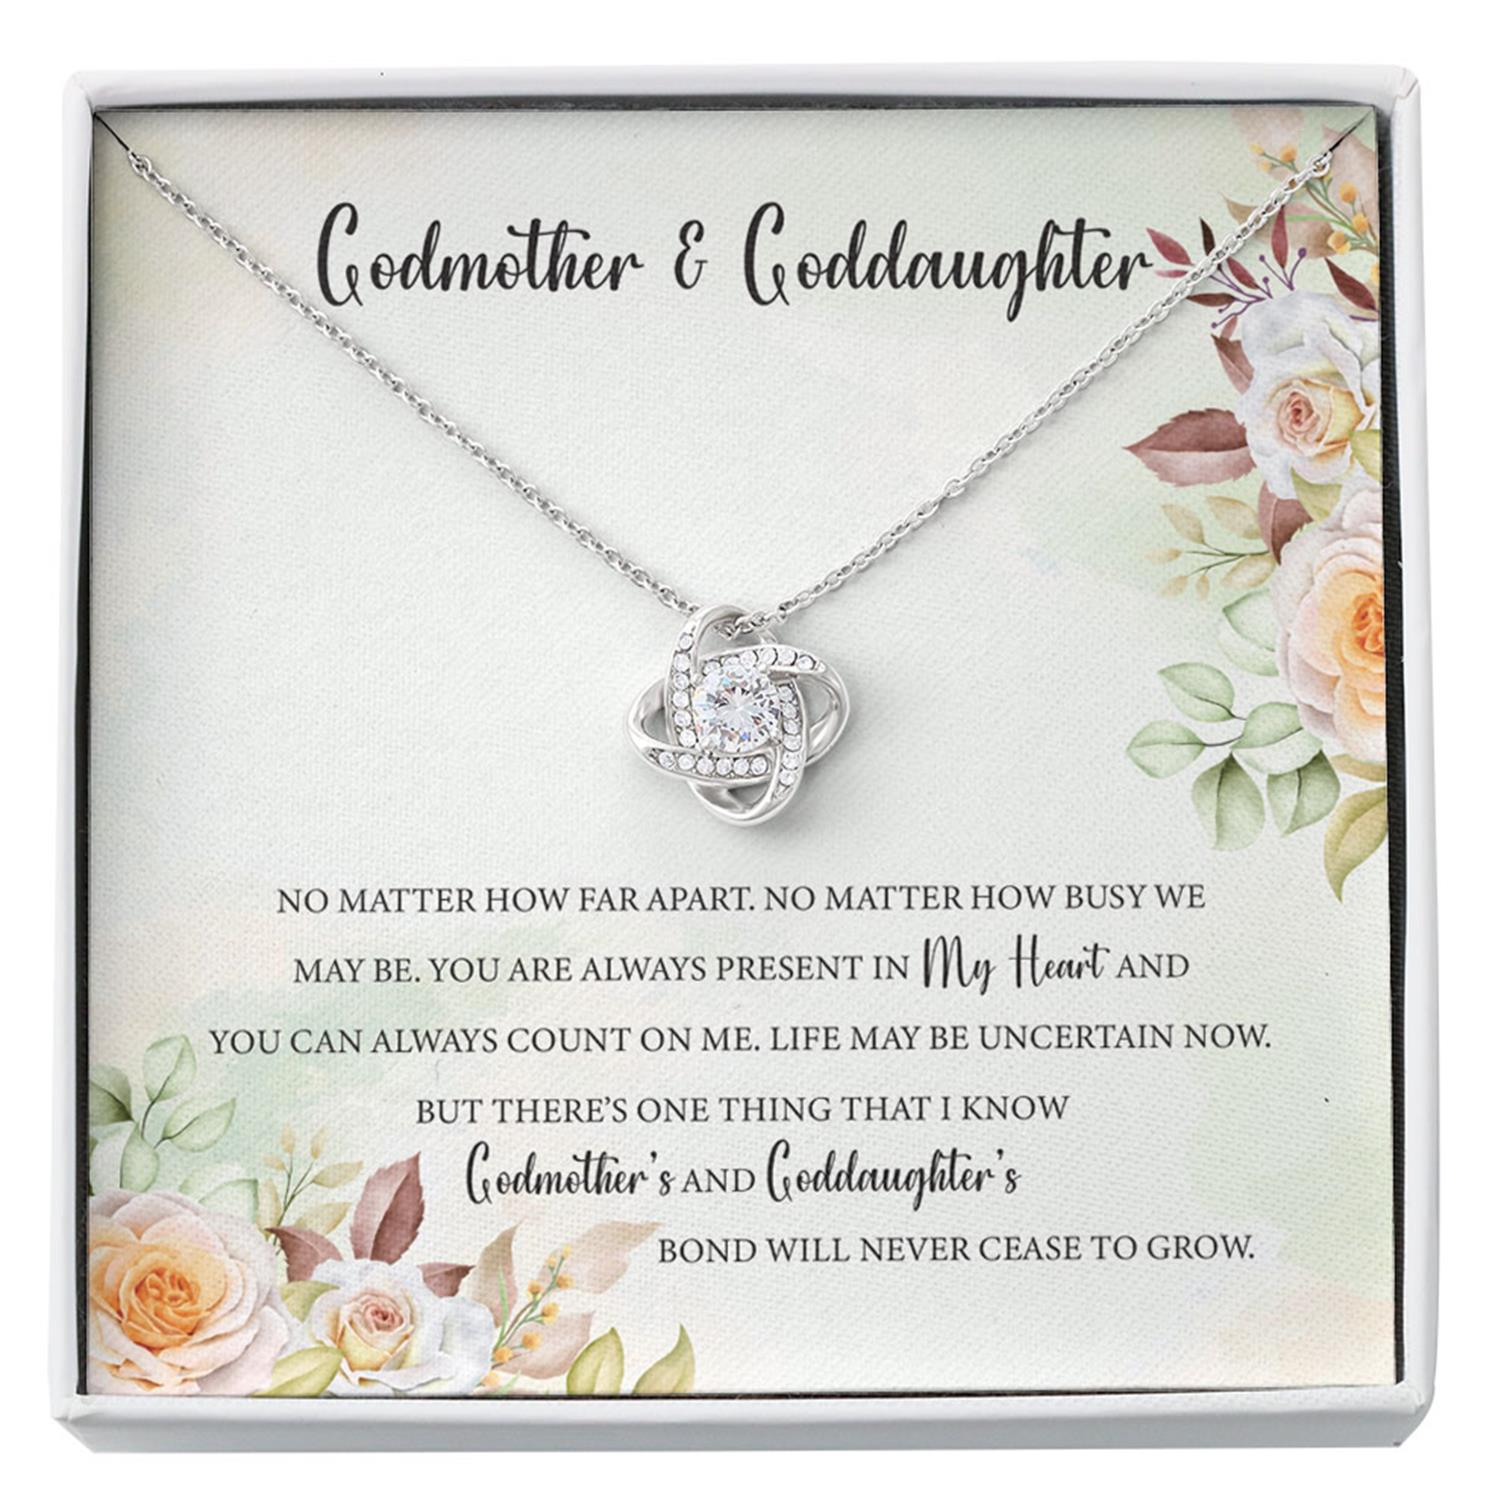 Goddaughter Necklace, Godmother Necklace, Godmother & Goddaughter Gift Necklace, Mother's Day Gift Custom Necklace